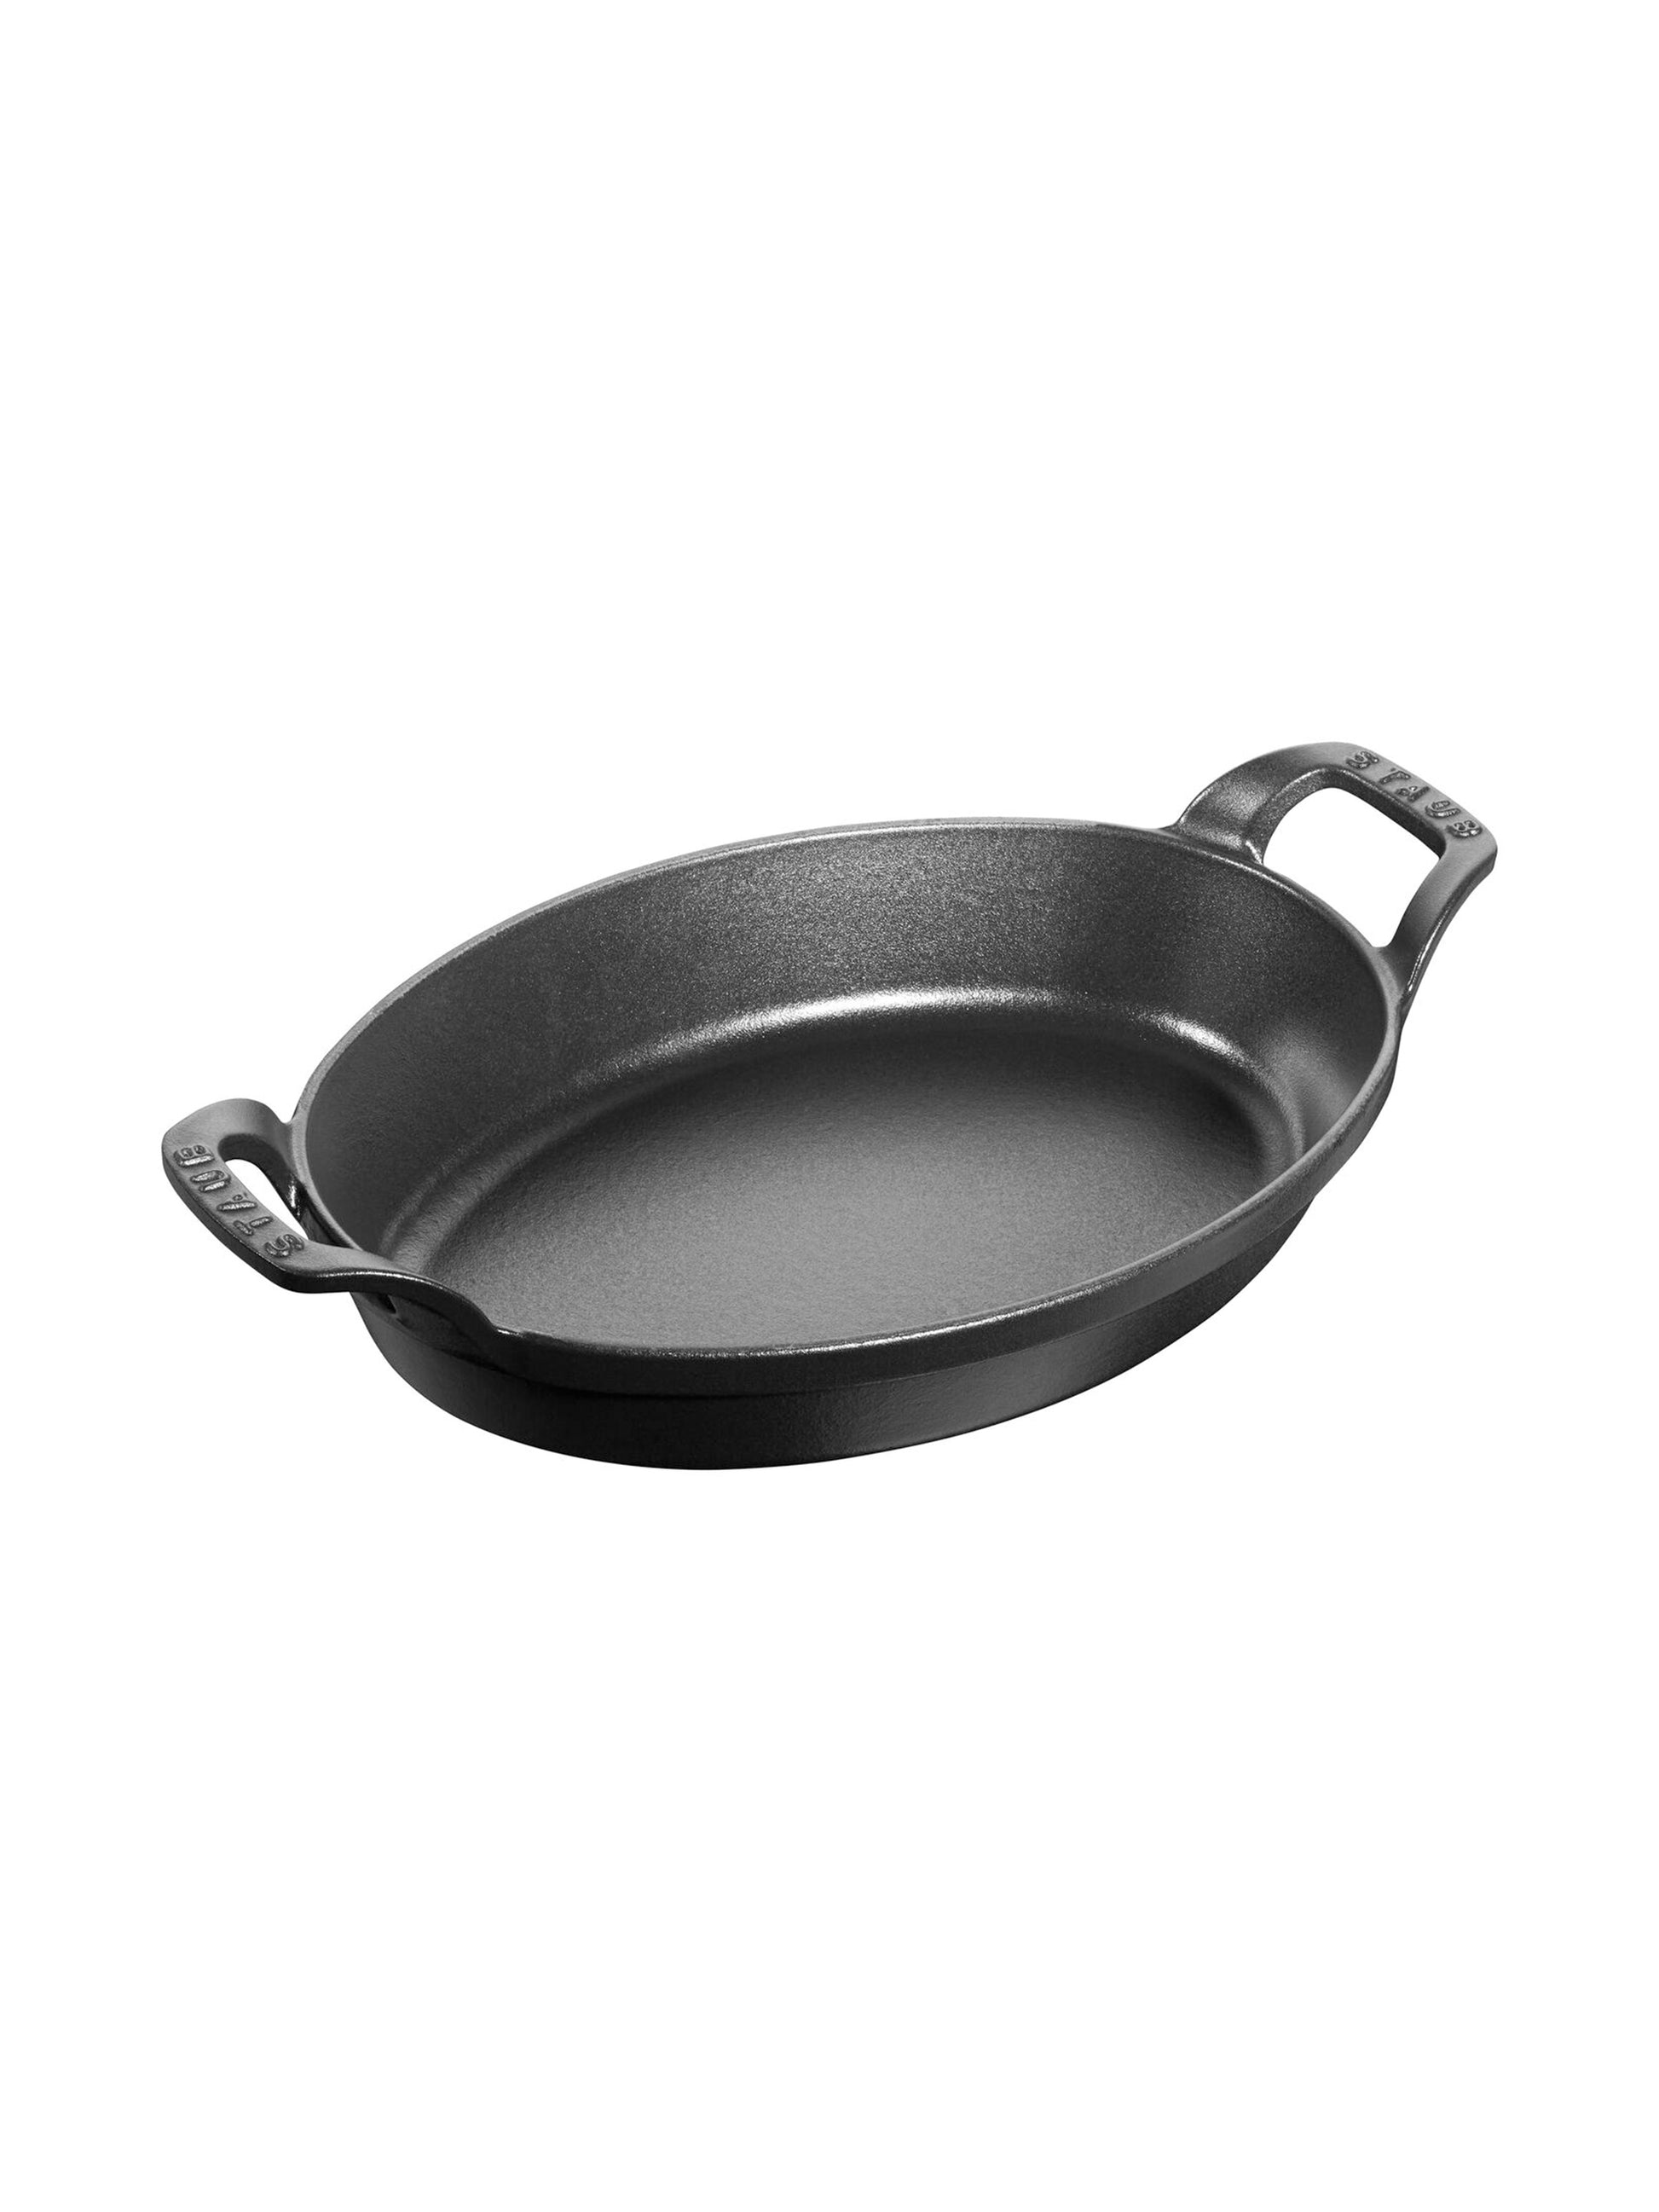 Staub Cast Iron Oval Baking Dish - Matte Black